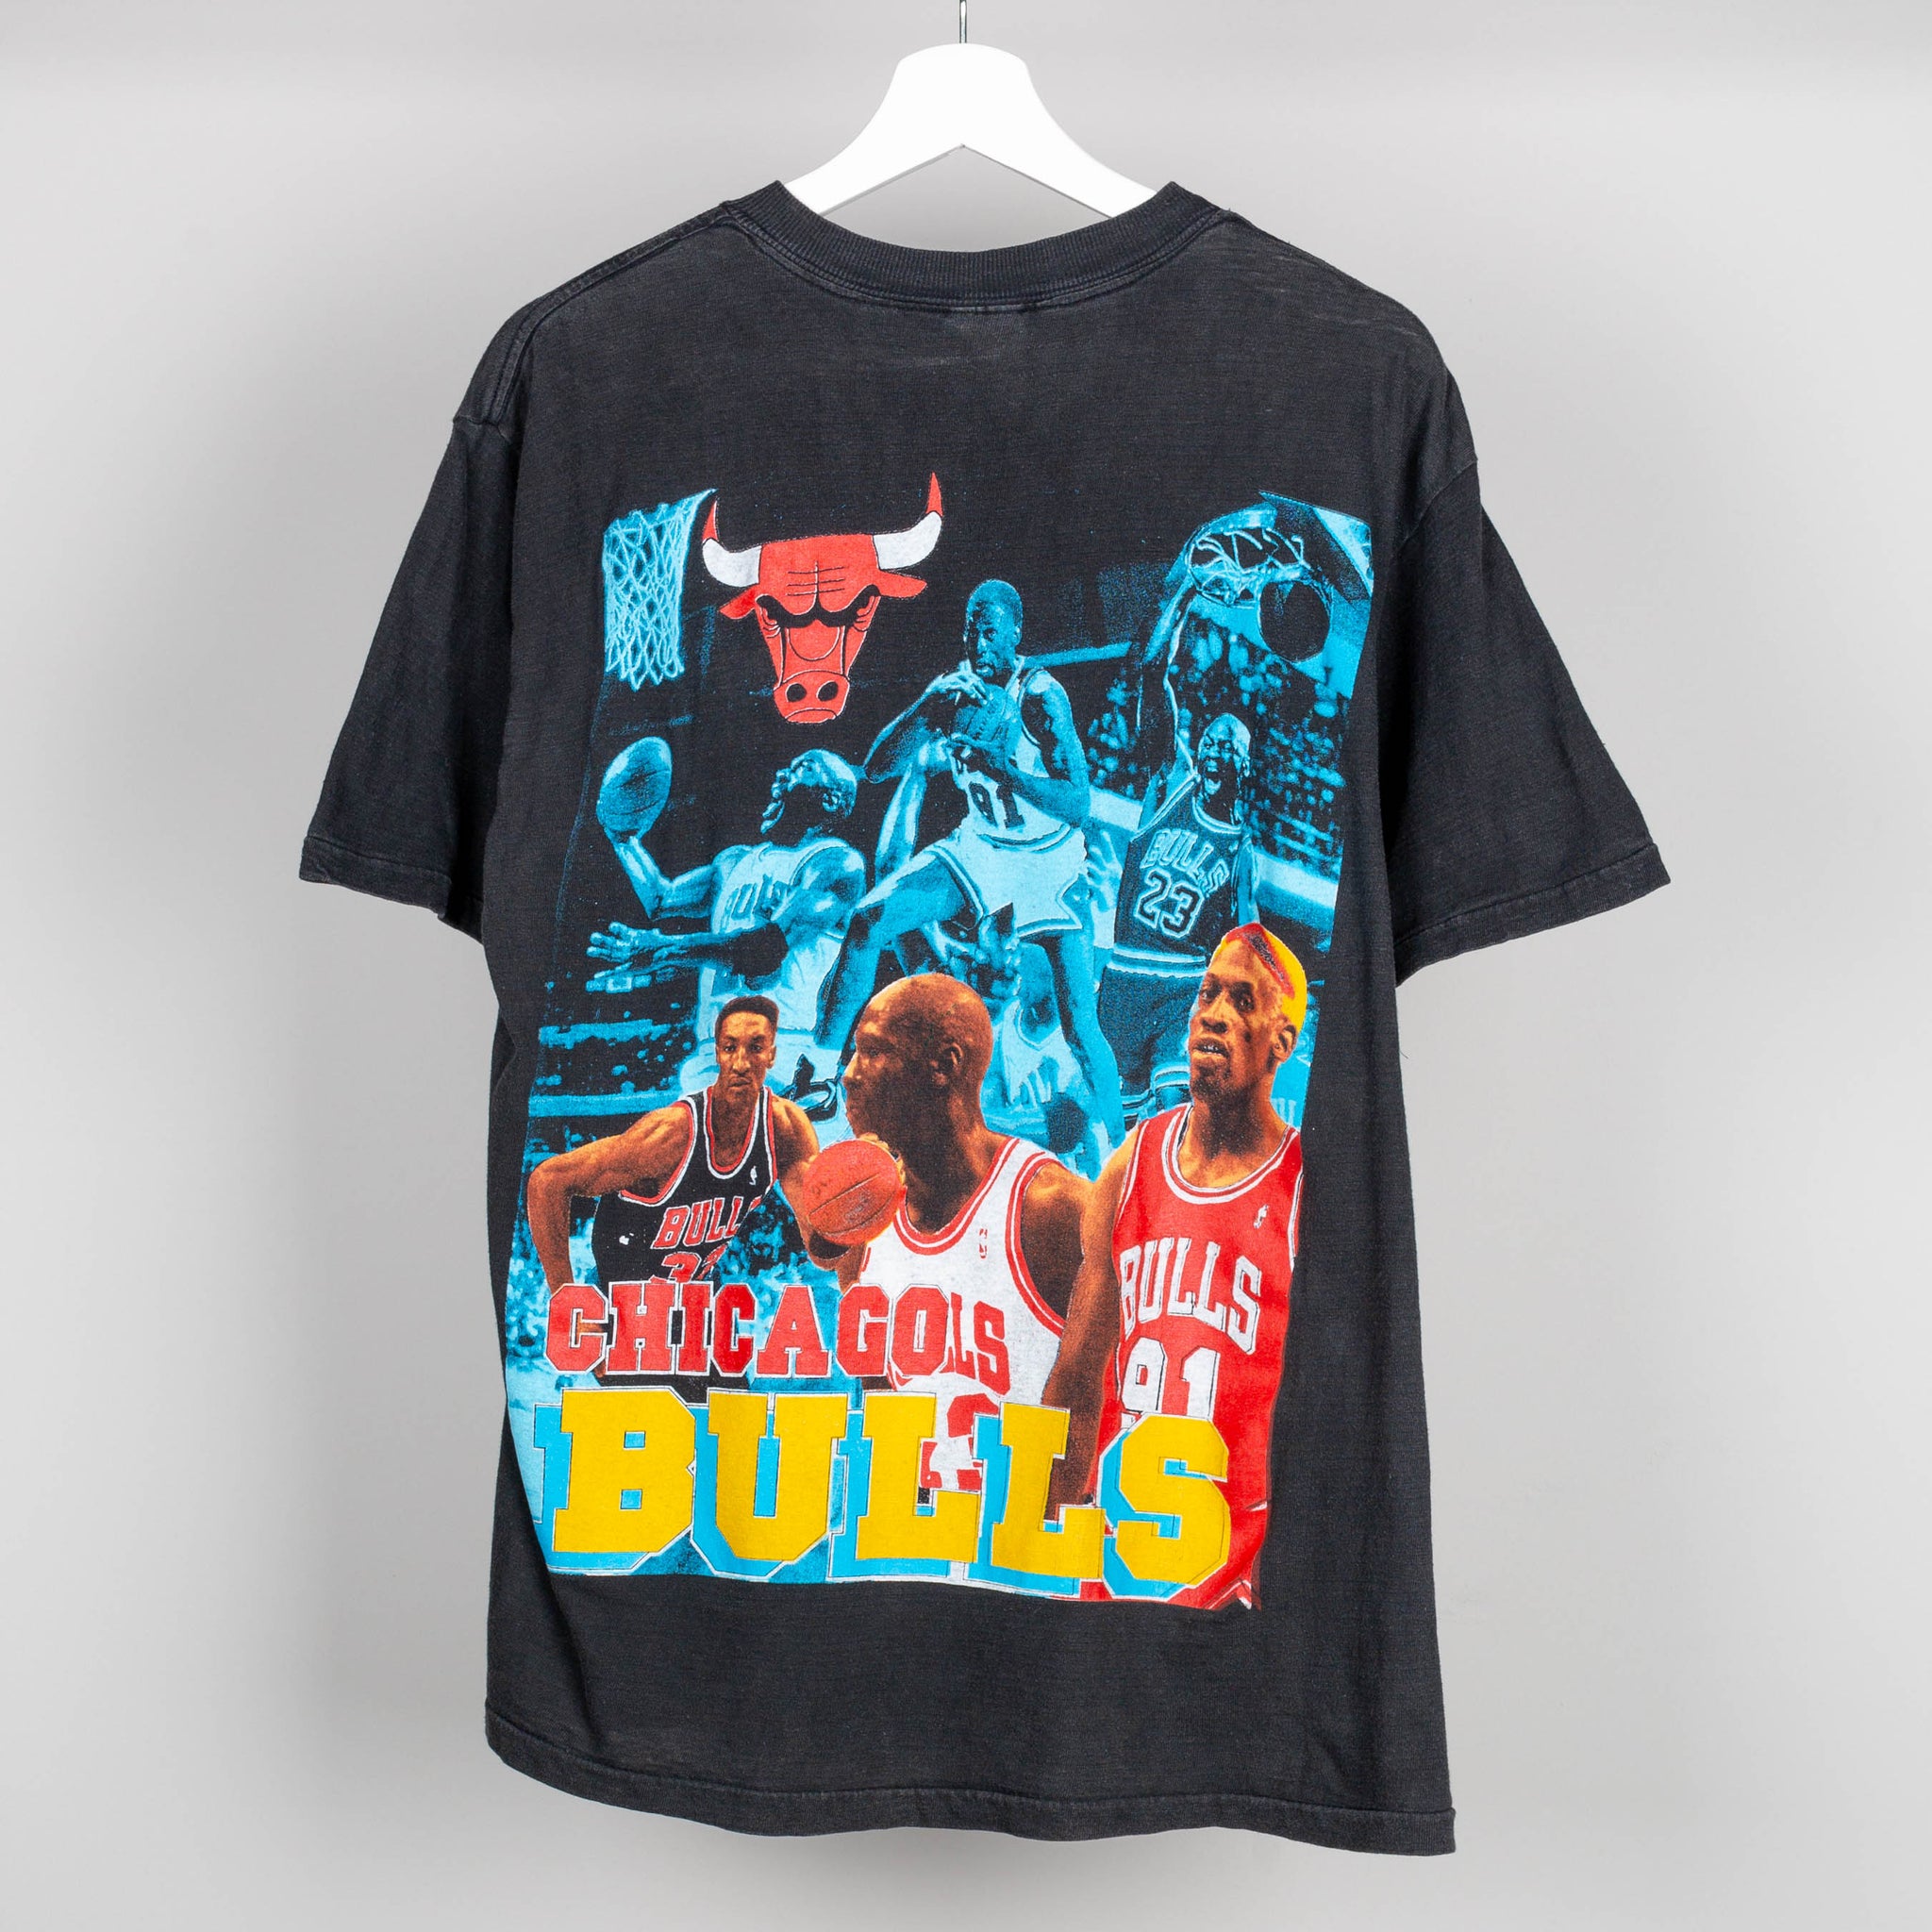 Vintage 2000s Chicago Bulls T-Shirt Size Large